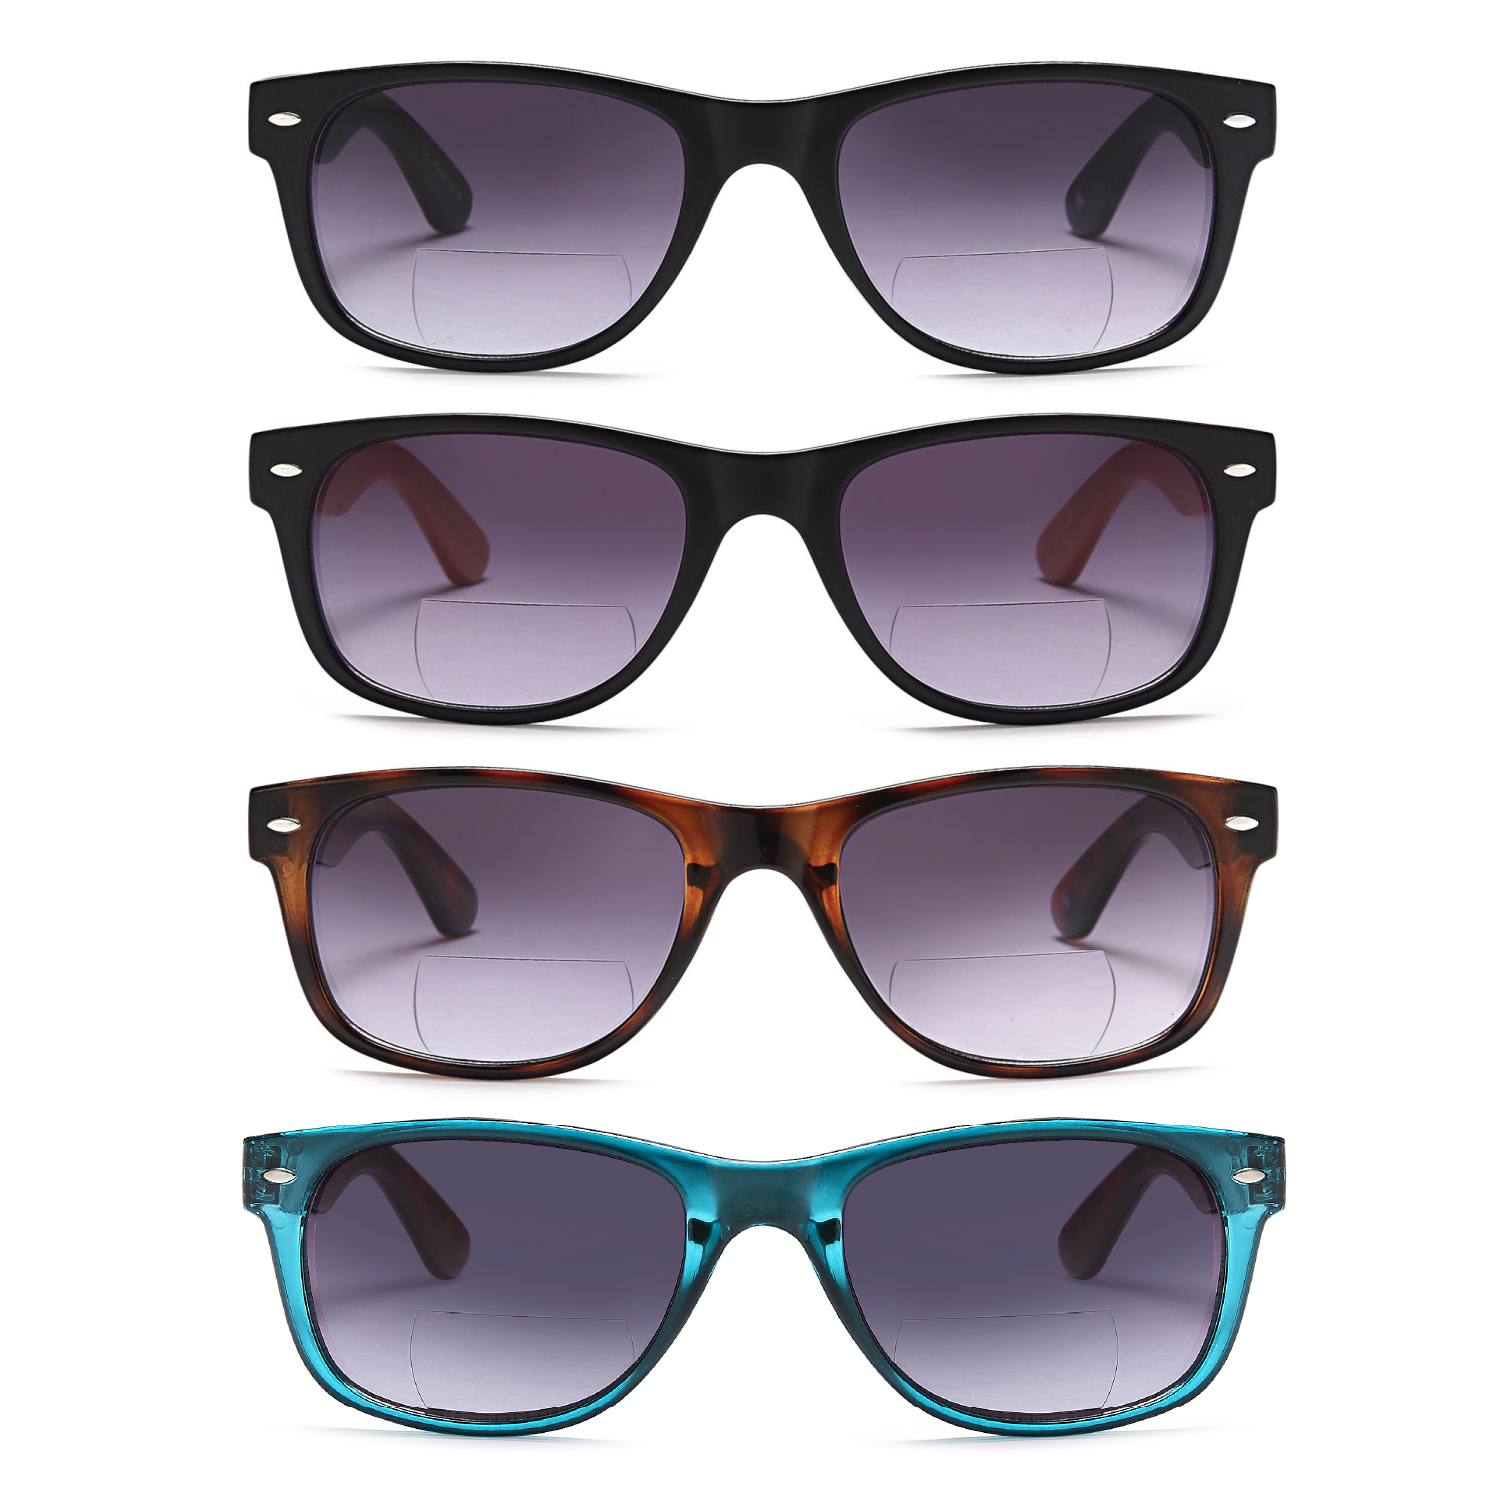 Gamma Ray Bifocal Sunglasses for Men and Women - 4 Pairs Sun Readers Sunglasses - image 3 of 4